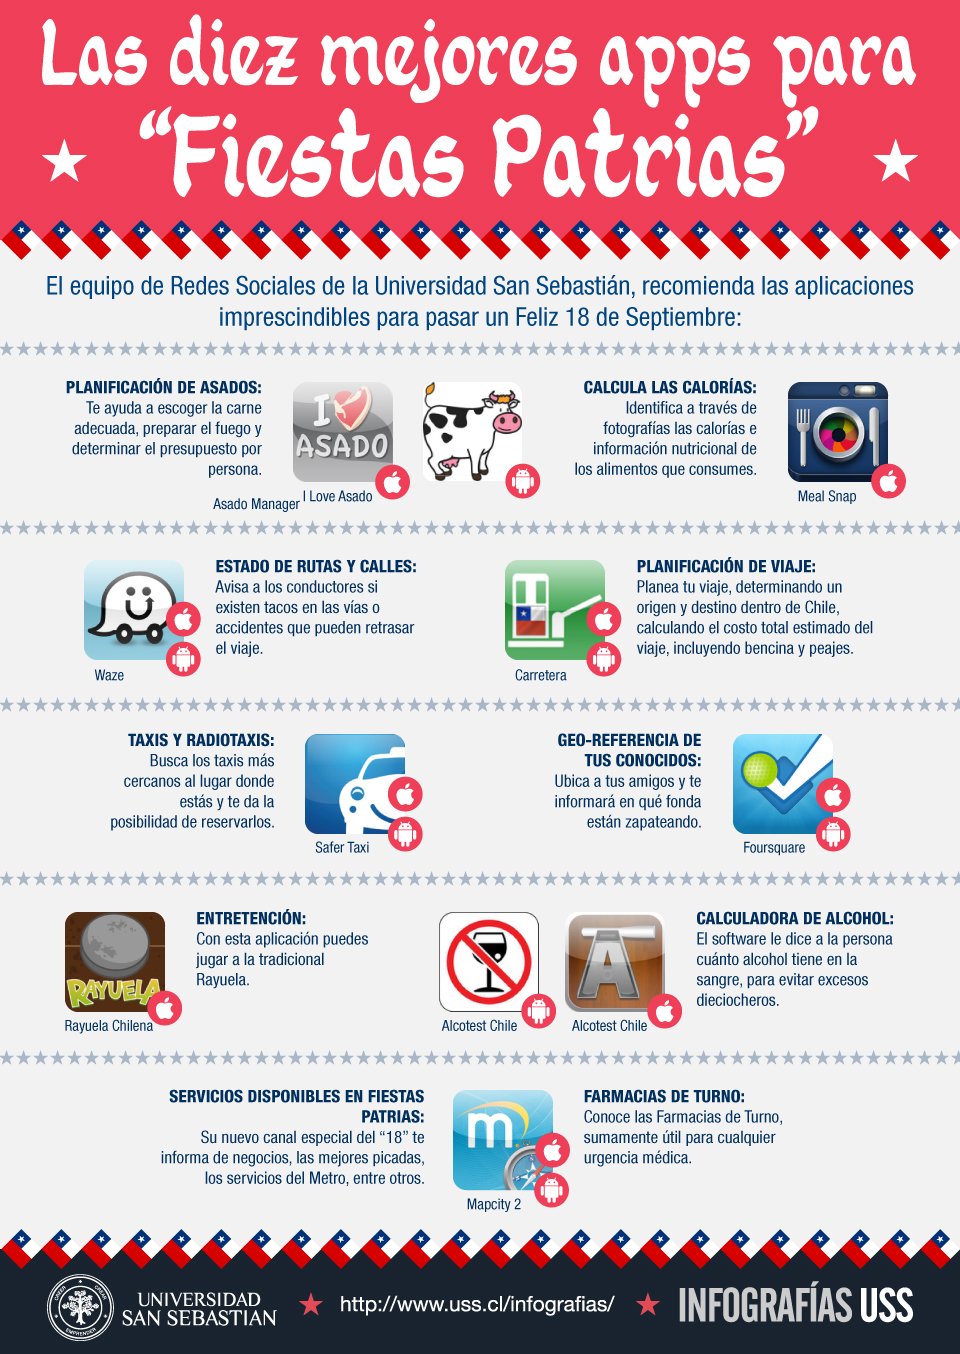 Infographic “Apps fiestas patrias”